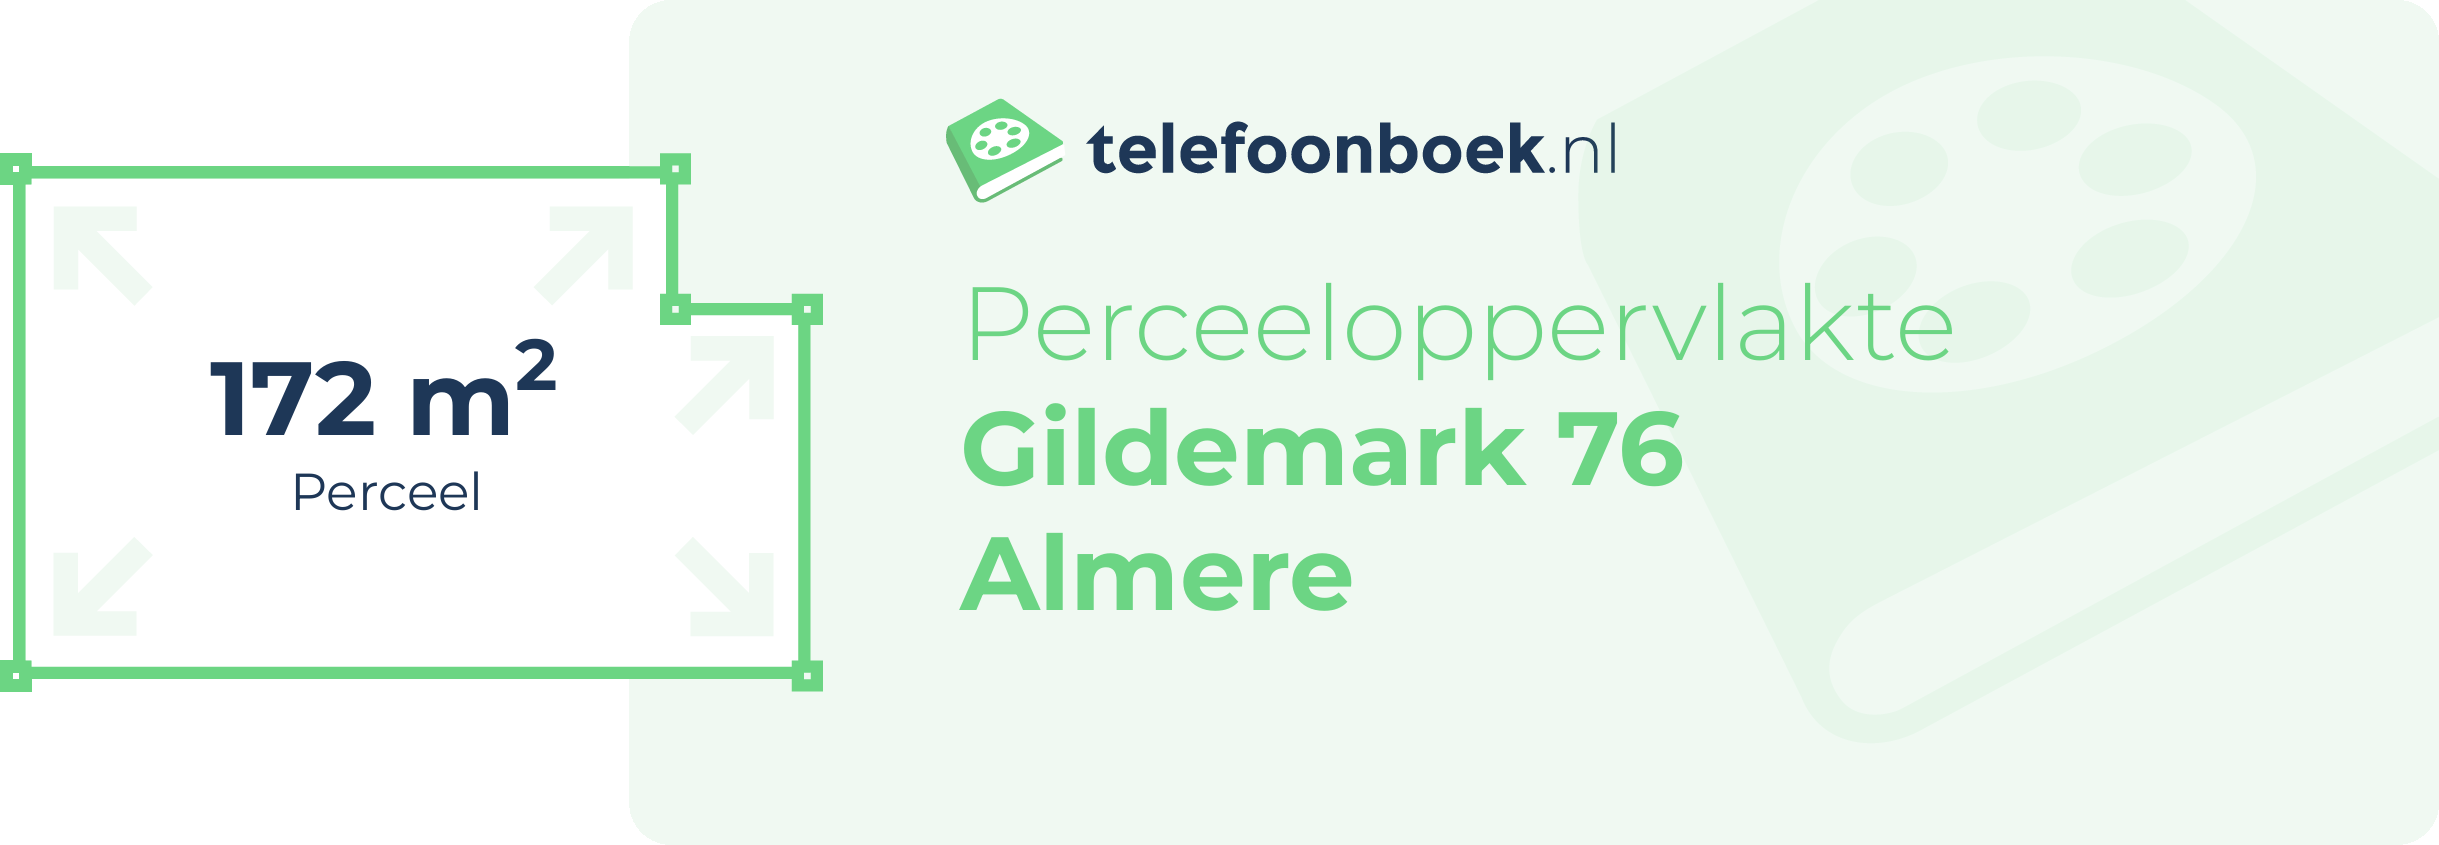 Perceeloppervlakte Gildemark 76 Almere